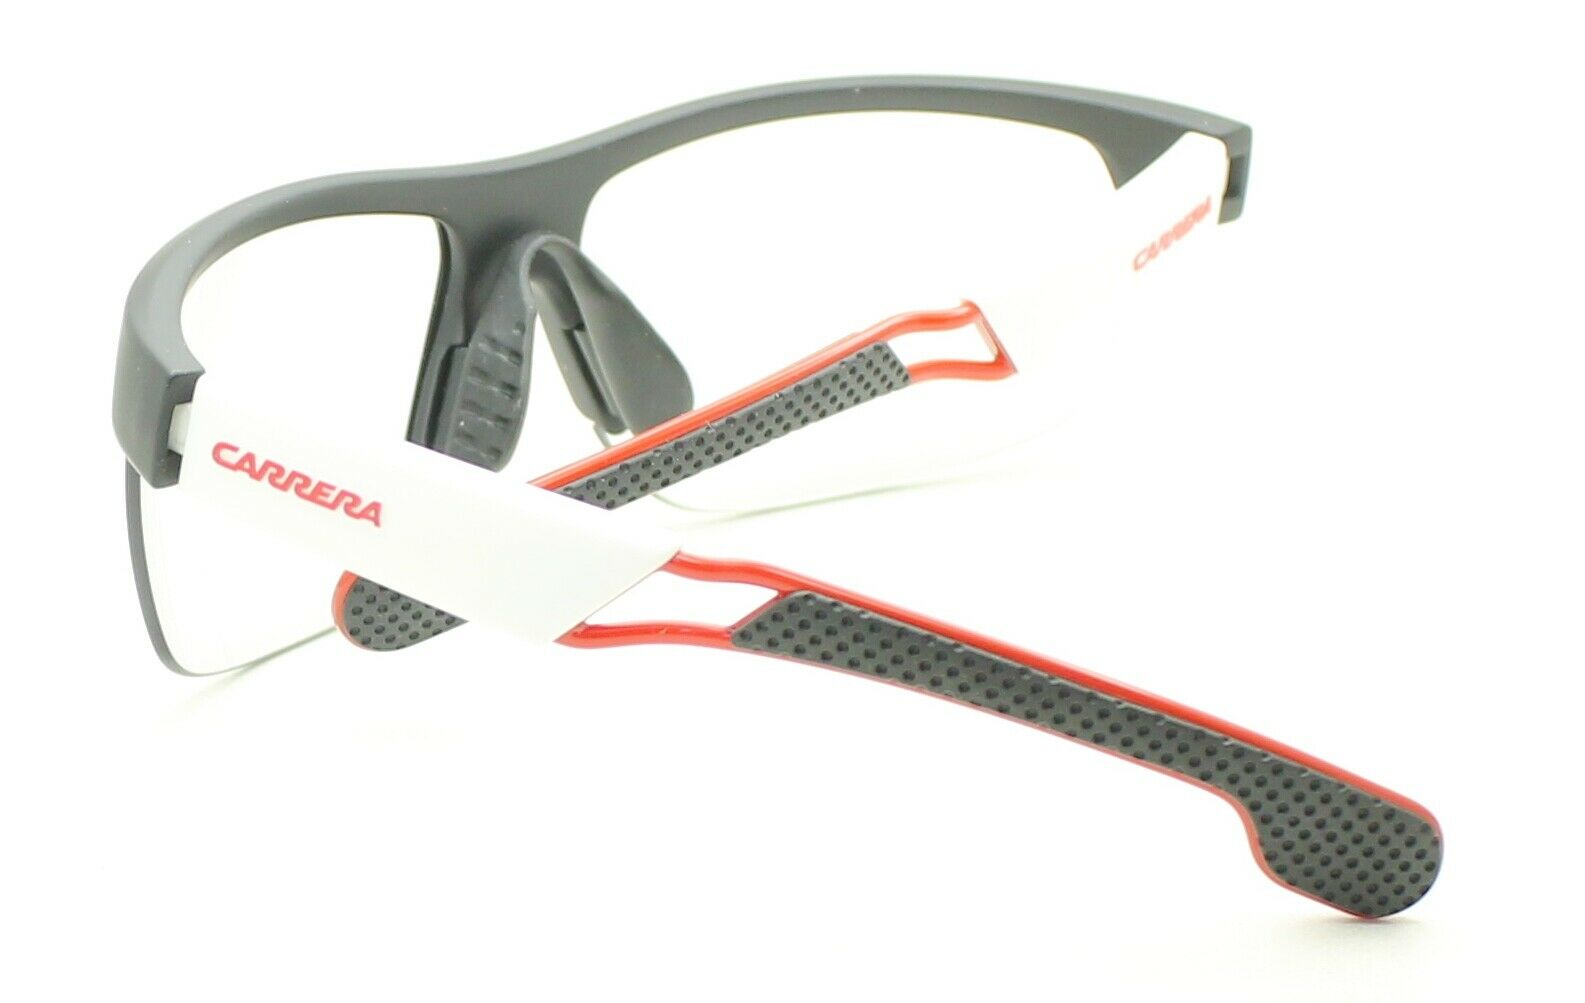 CARRERA 4005/S 4NLSW 65mm Eyewear Sunglasses Shades Wrap Frames New - Italy